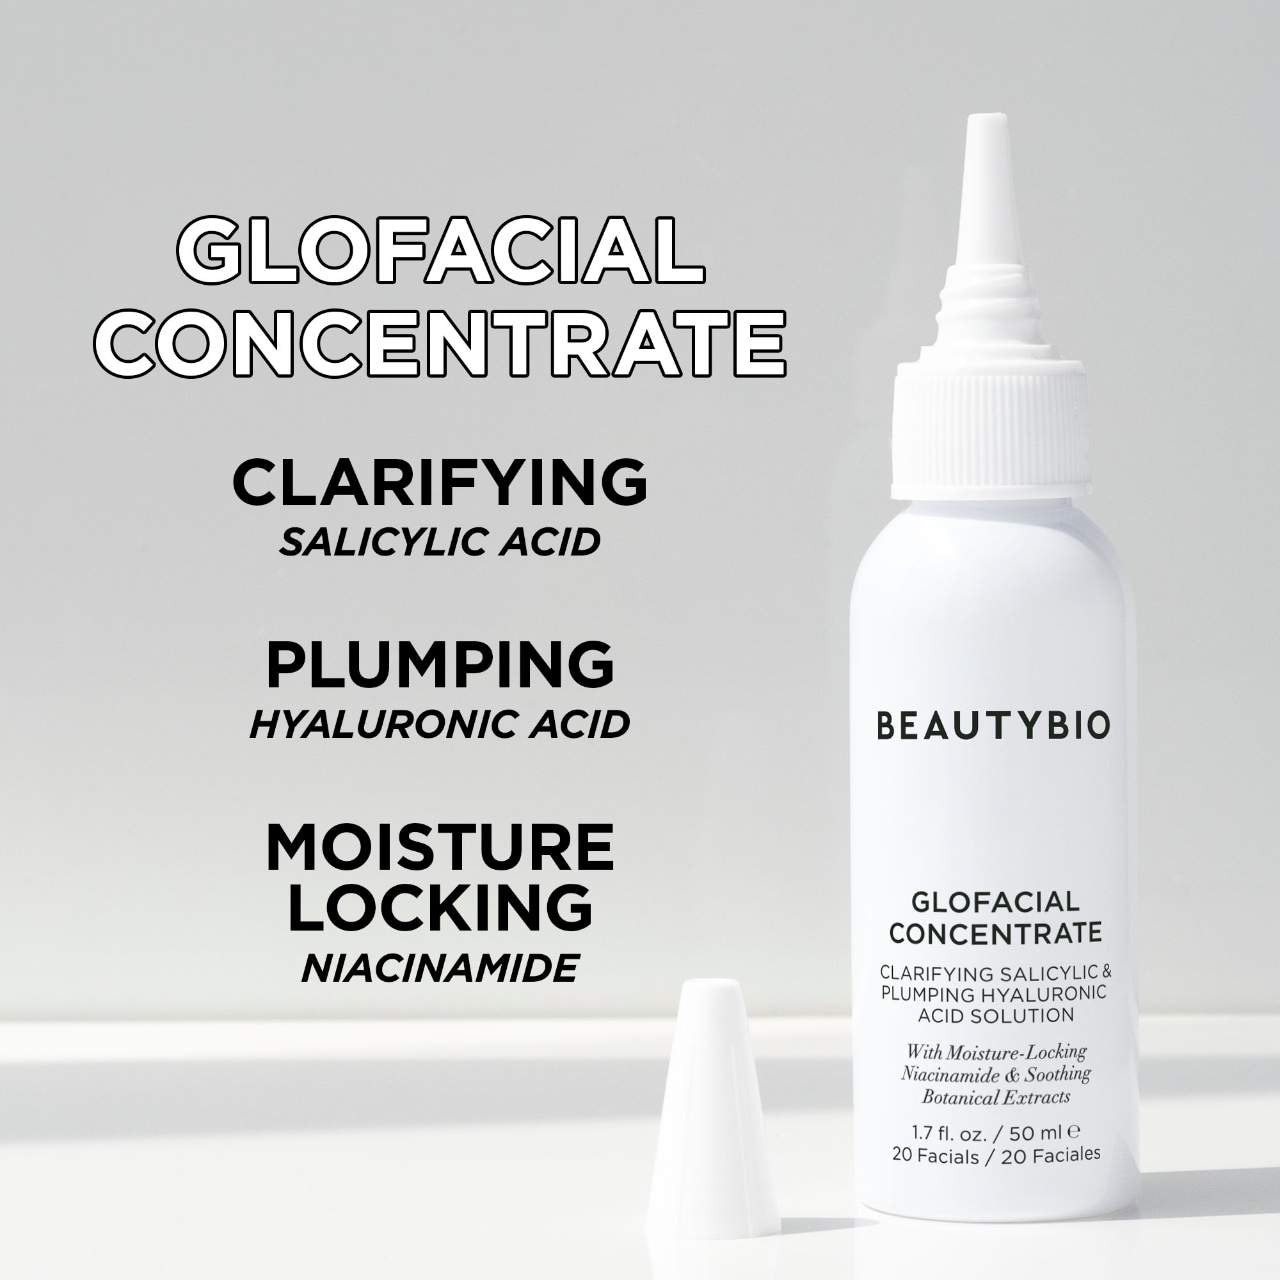 GLOfacial Clarifying Salicylic & Plumping Hyaluronic Acid Concentrate BeautyBio